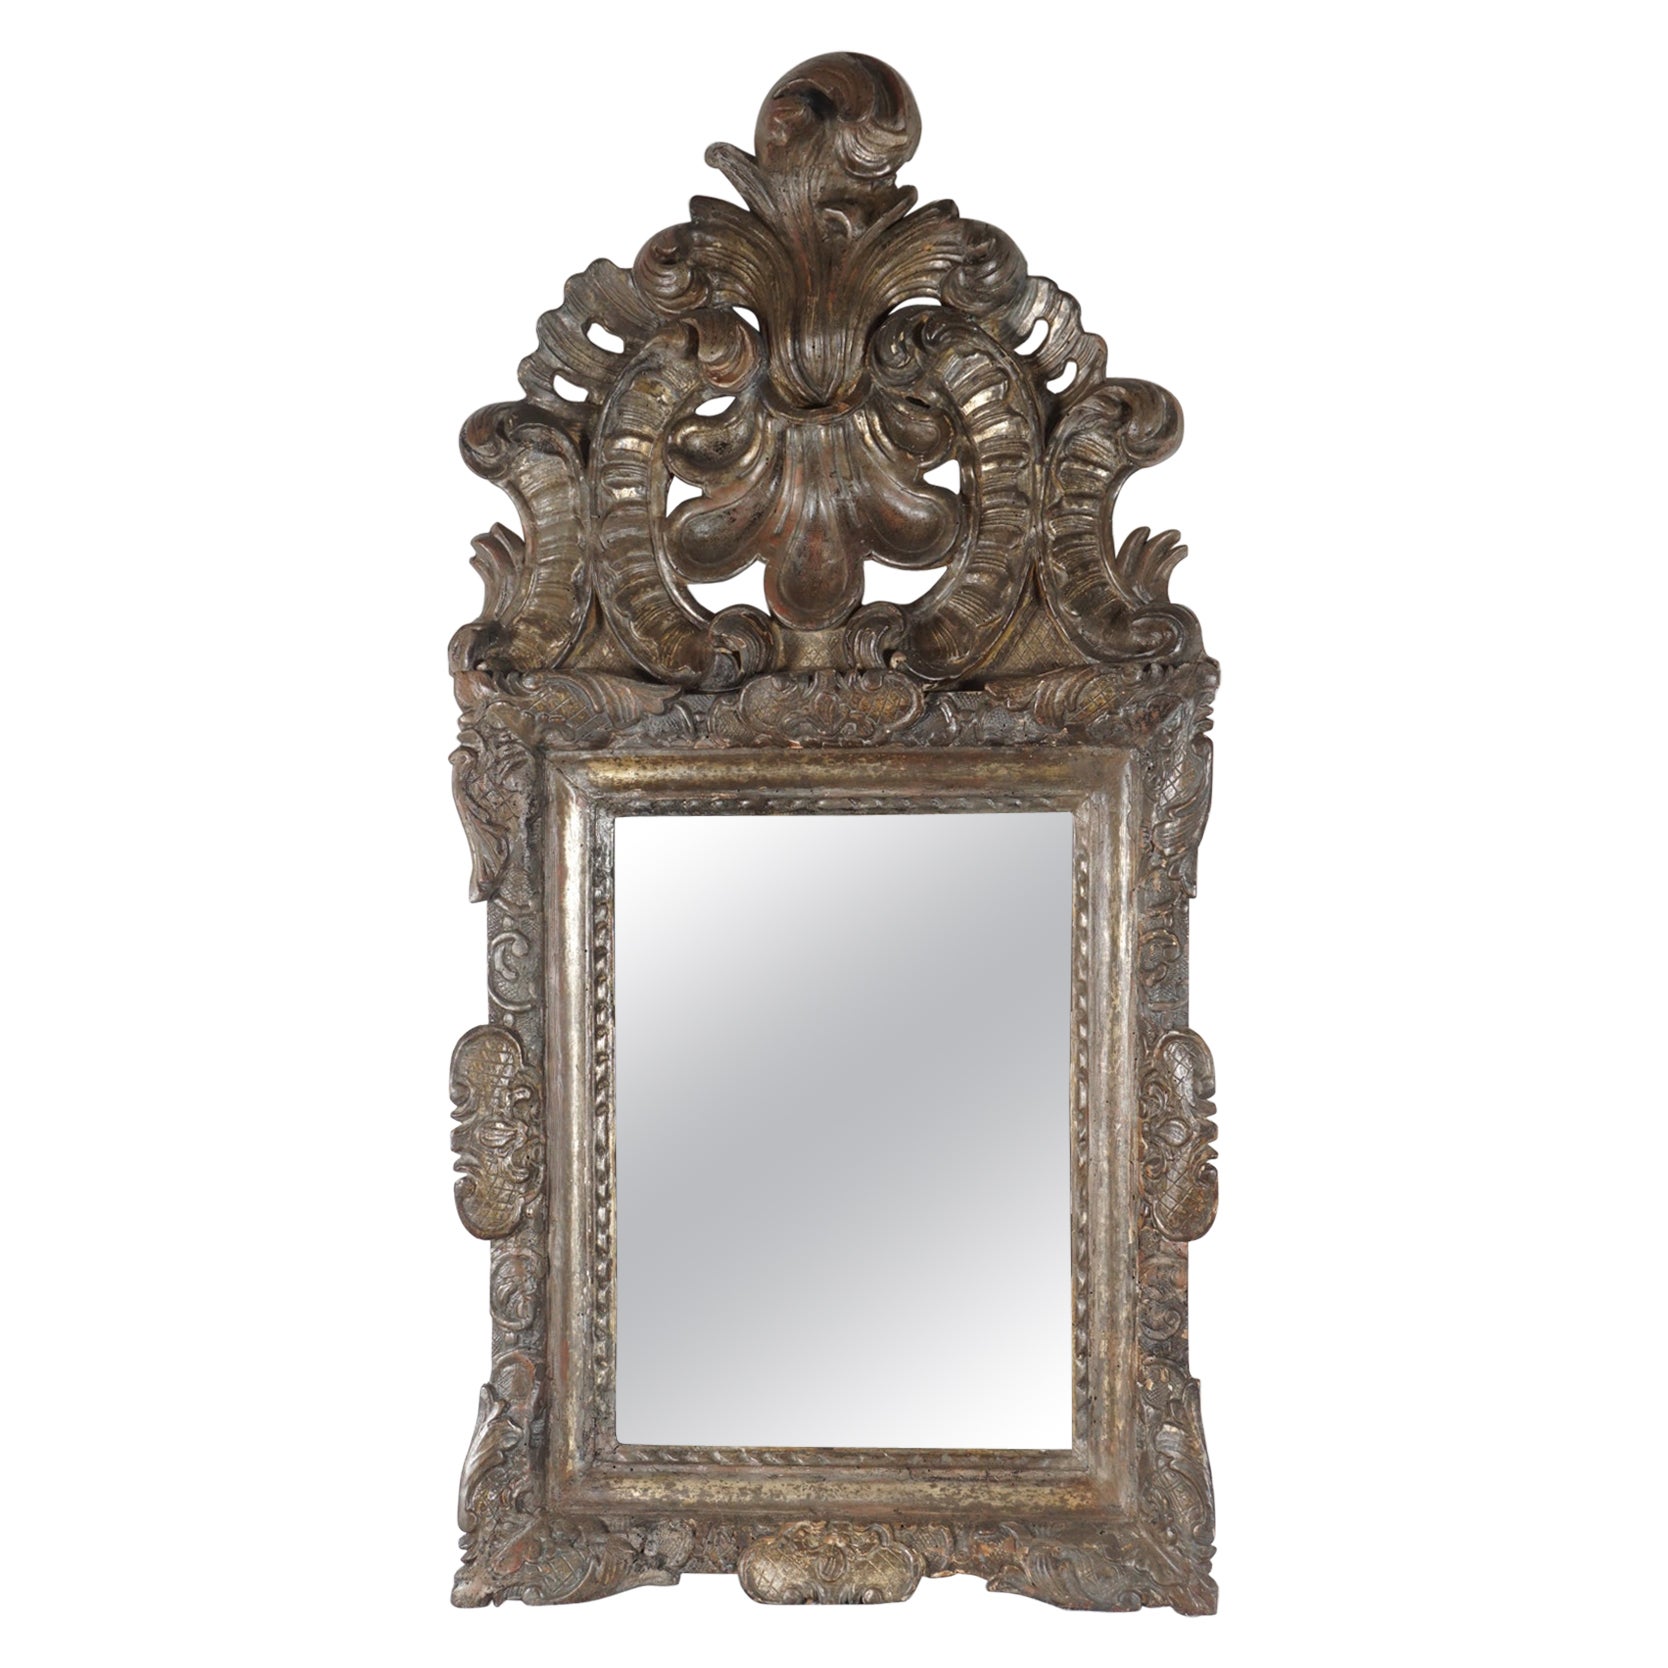 Period Dutch Baroque Silver Gilt Carved Wood Mirror